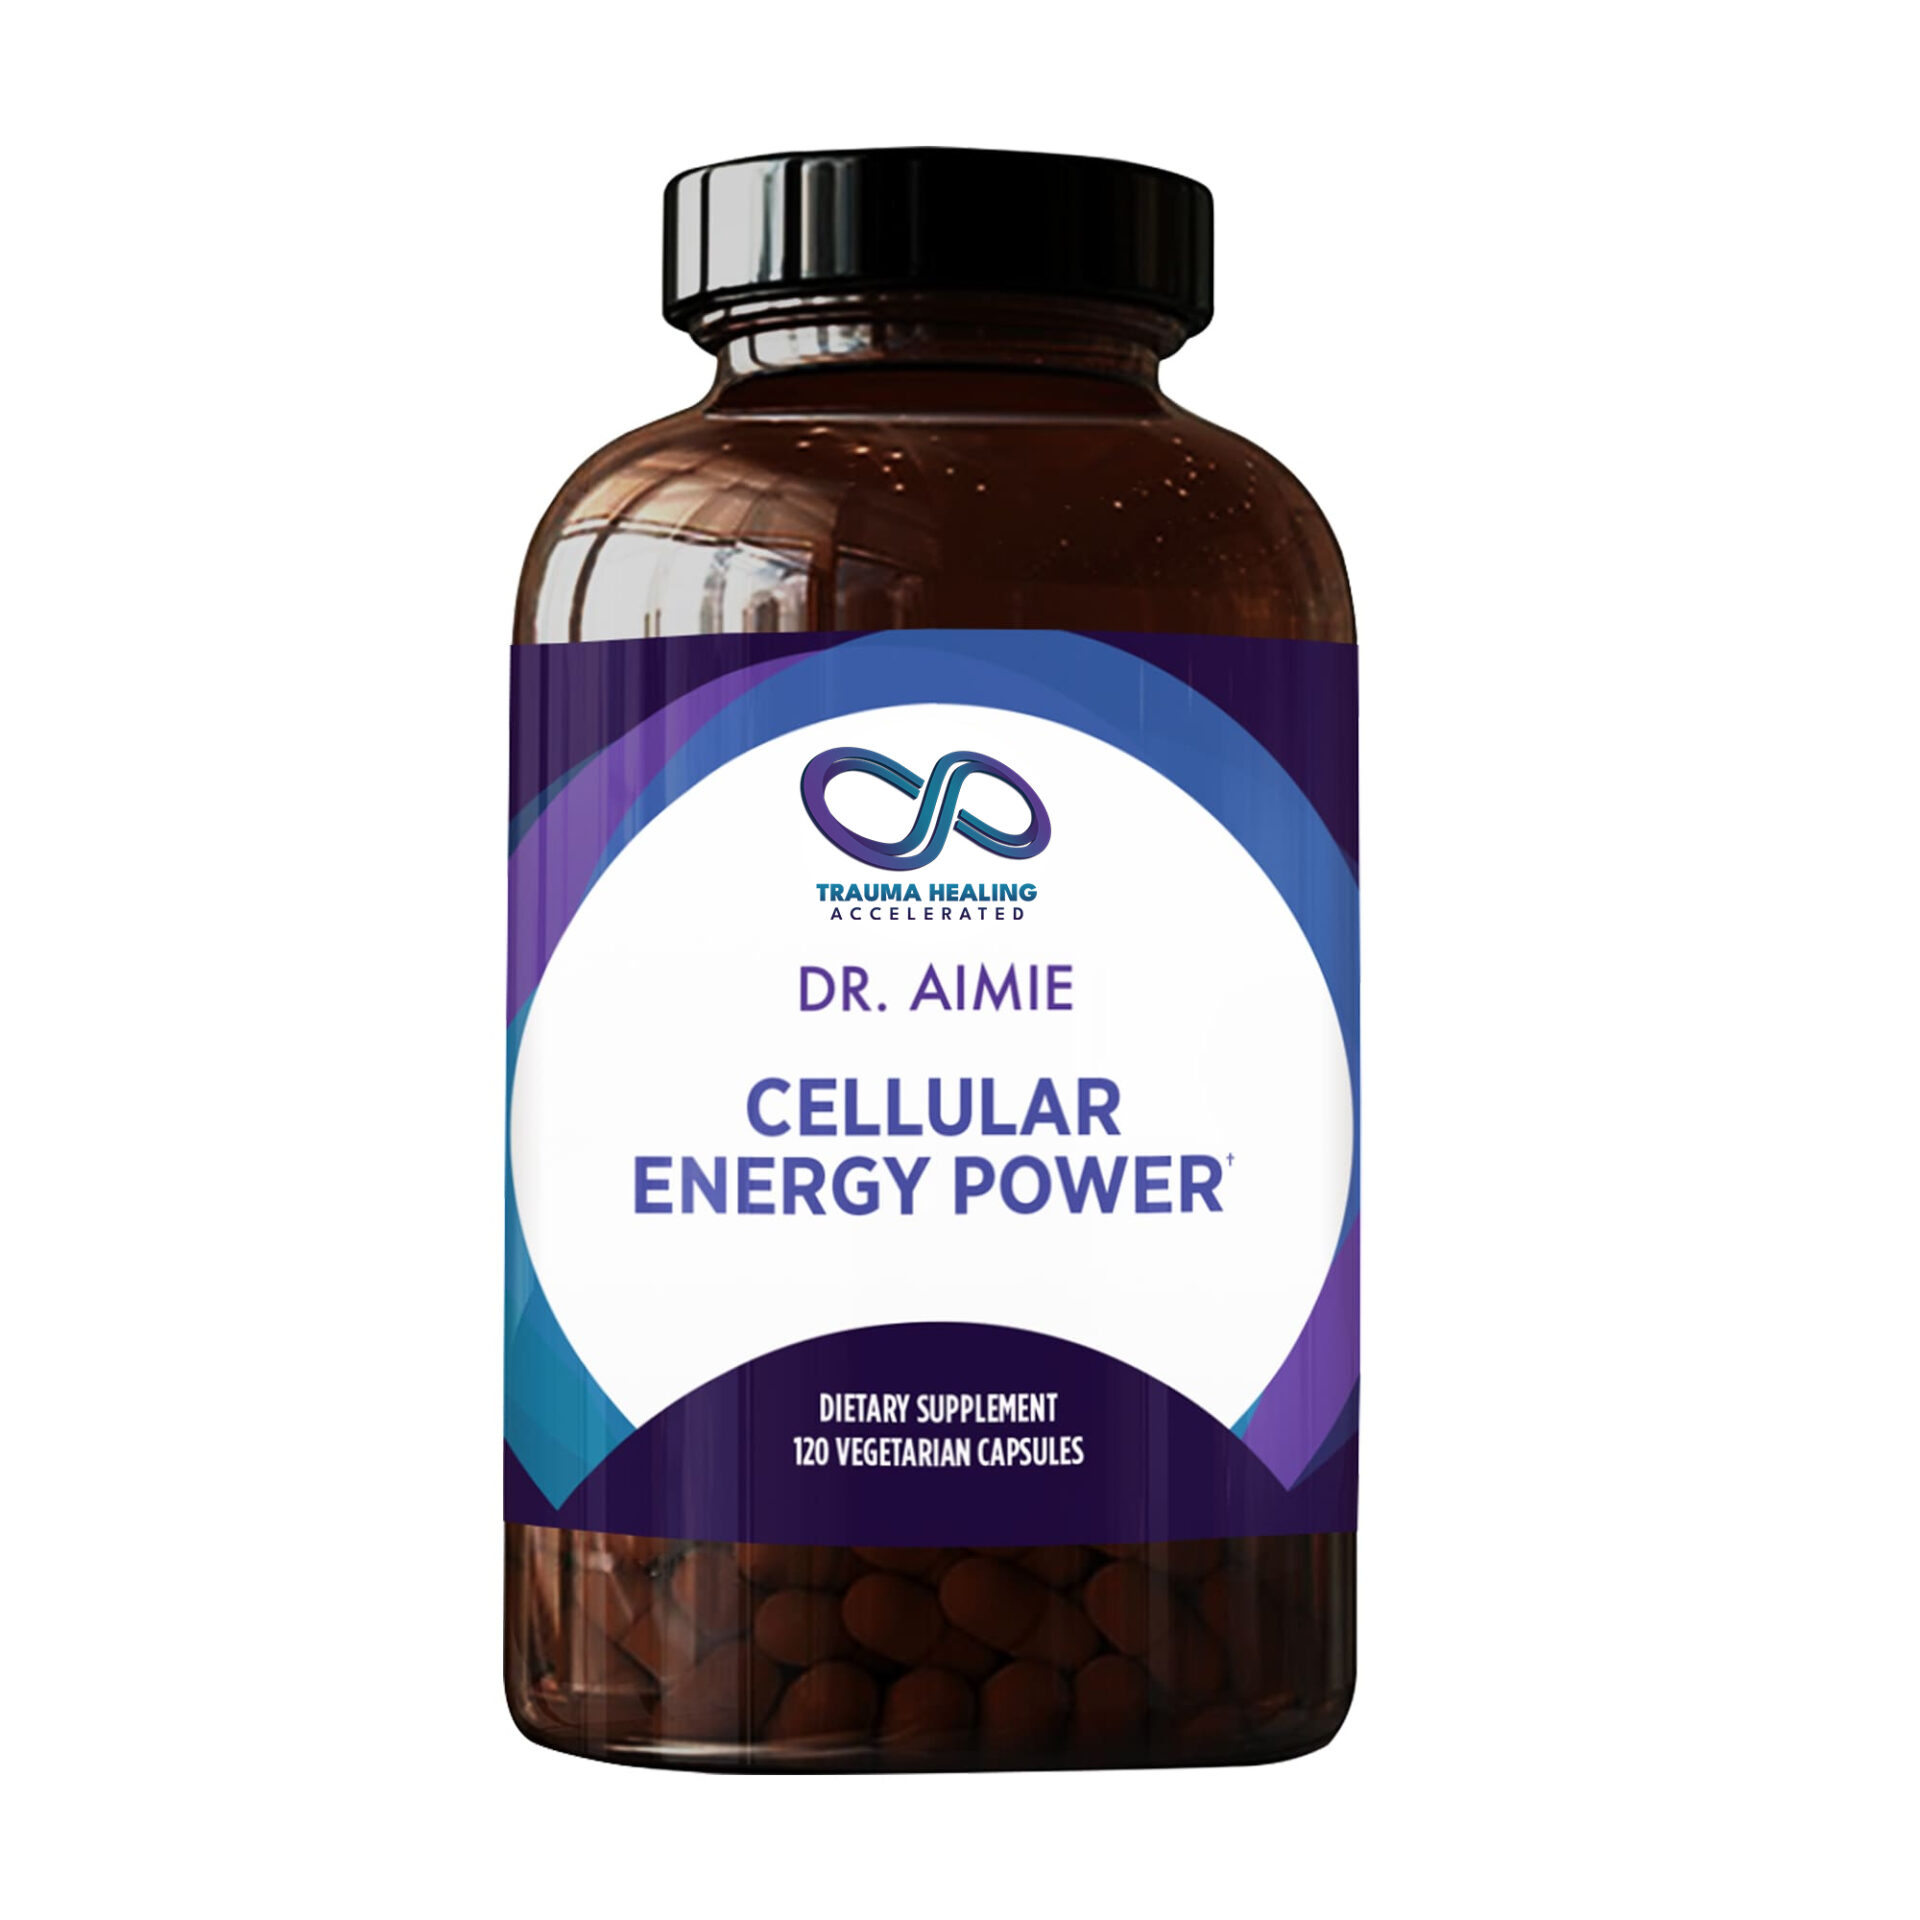 cellular energy power supplement